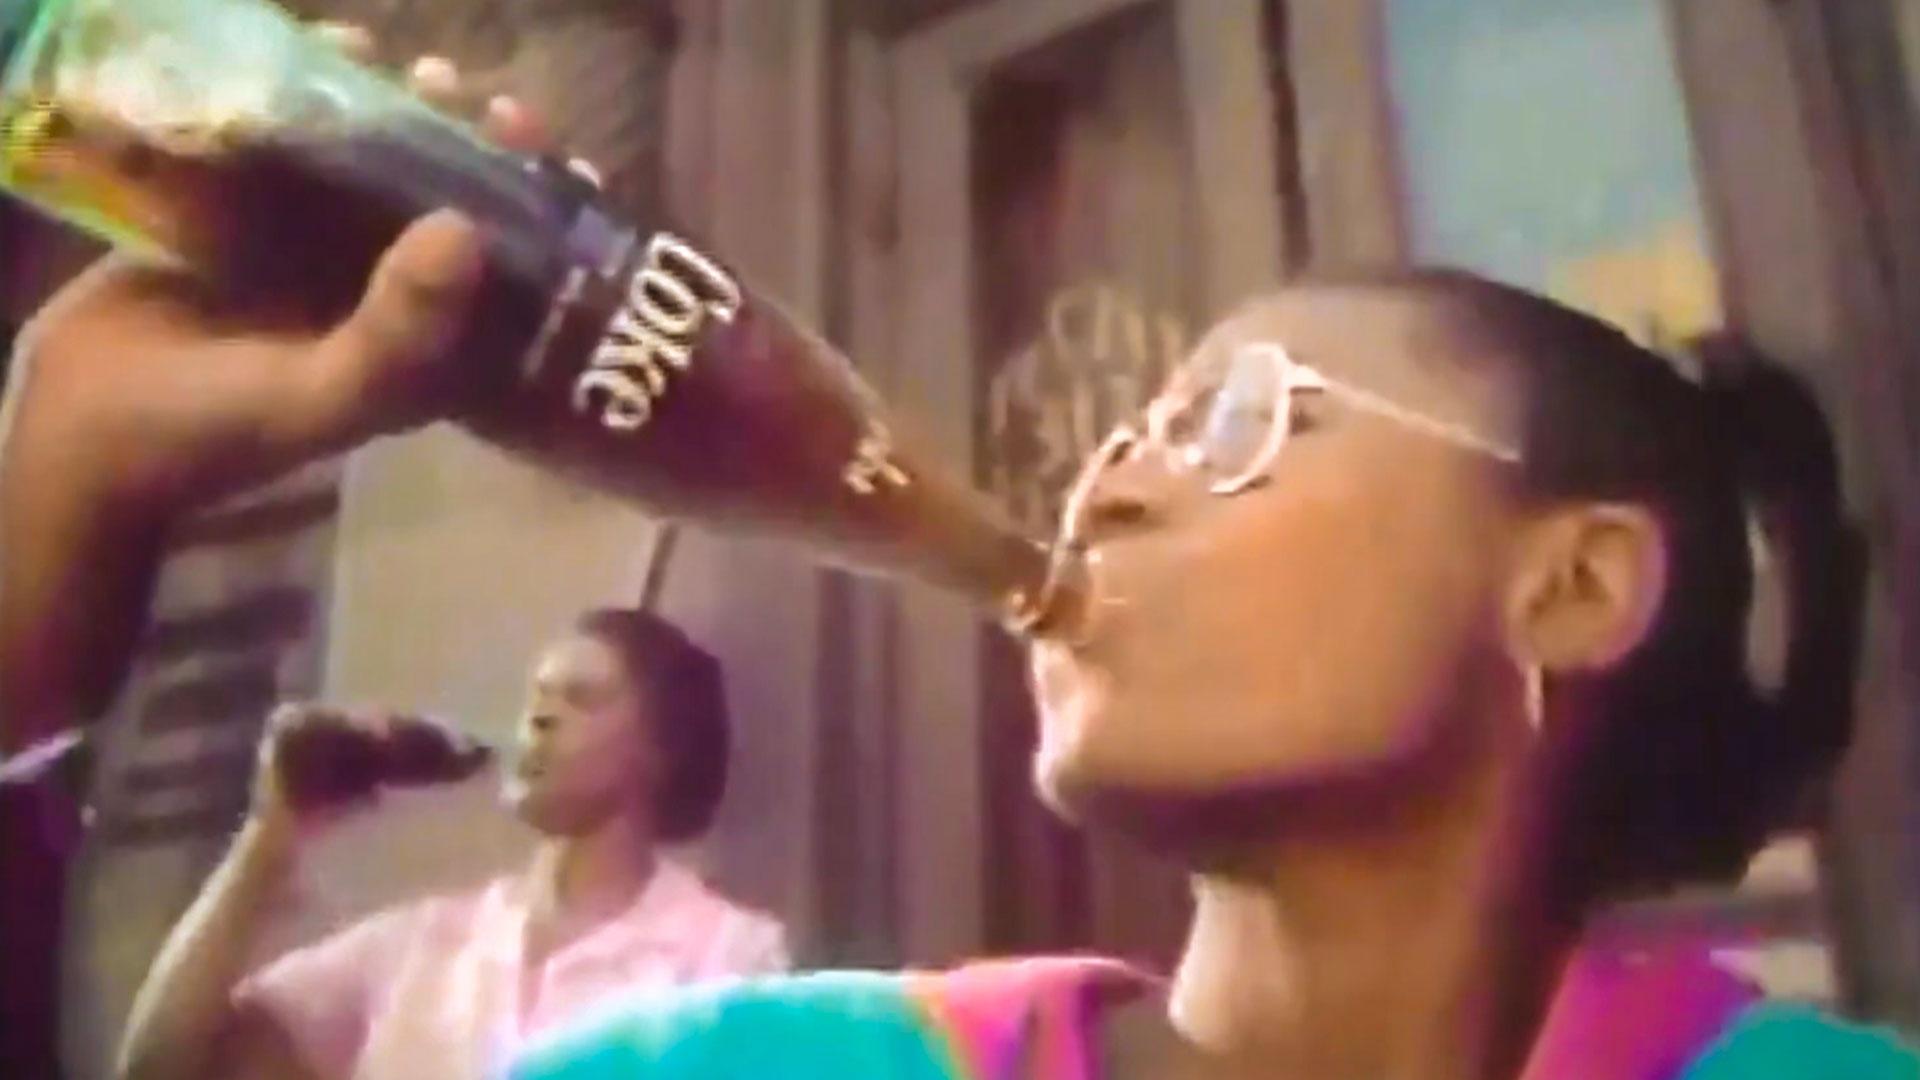 Teen girl drinking Coke from glass bottle in vintage ad